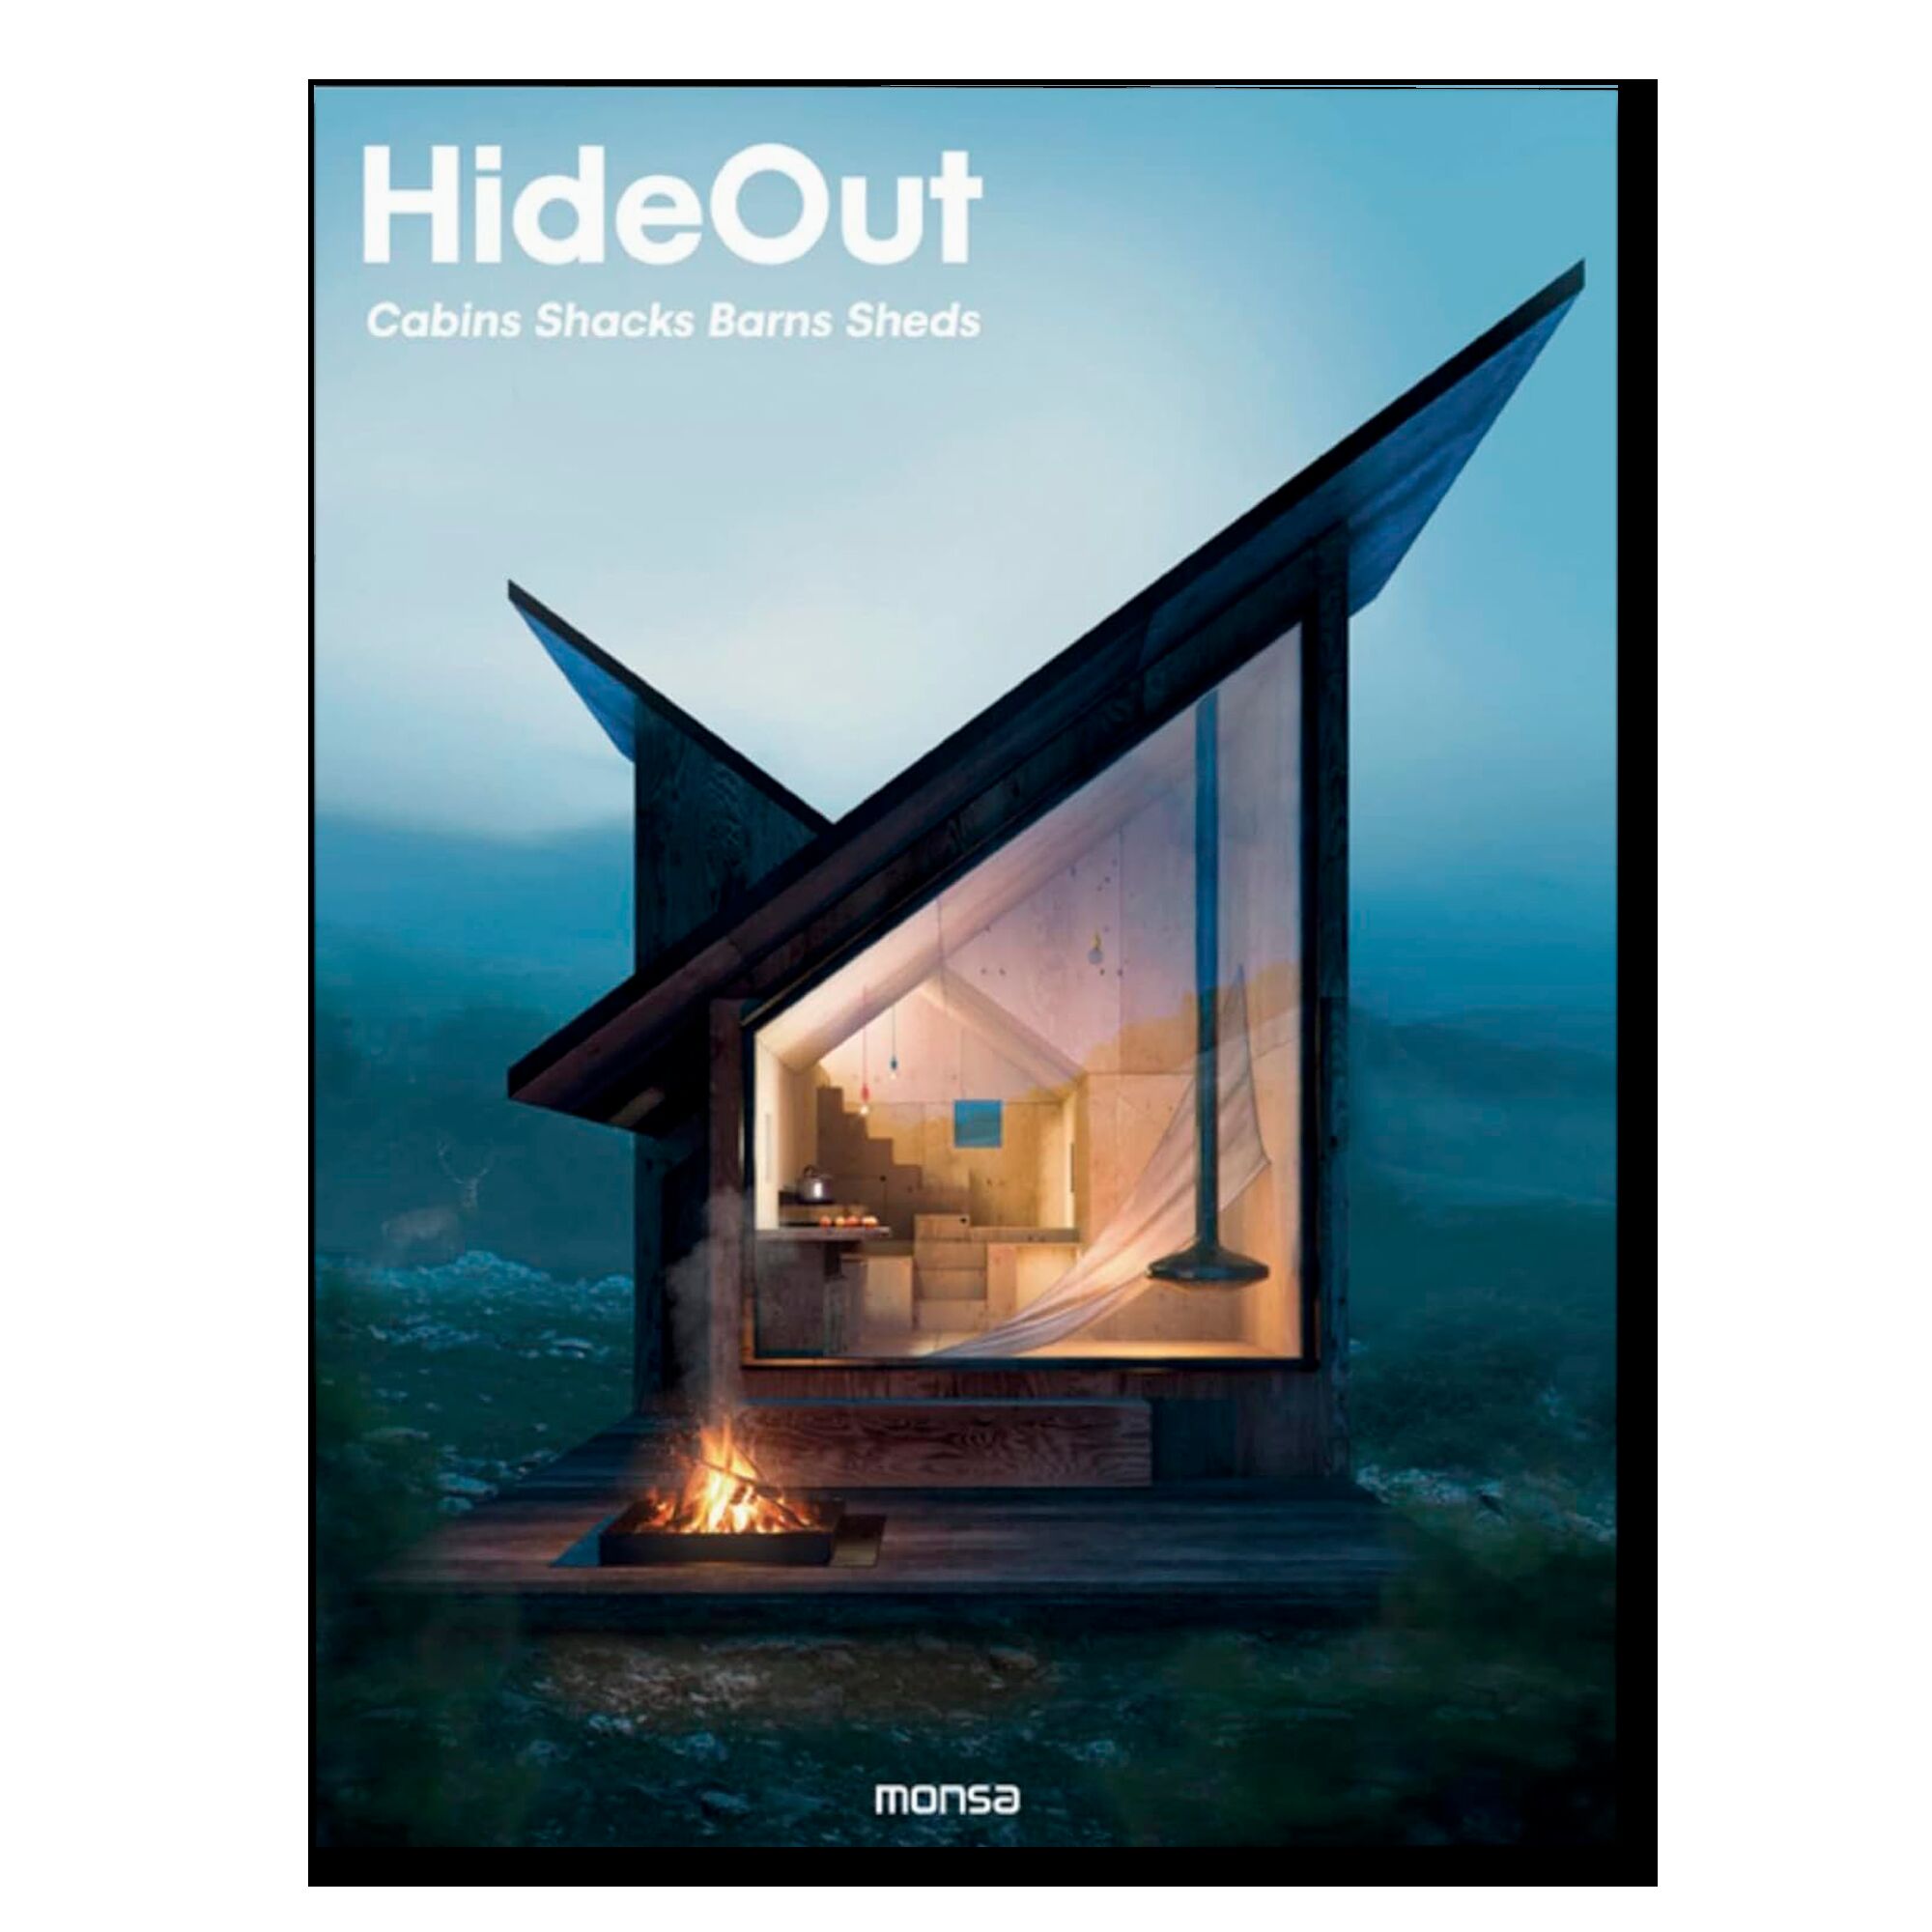 HideOut. Cabins, Shacks, Barns, Sheds